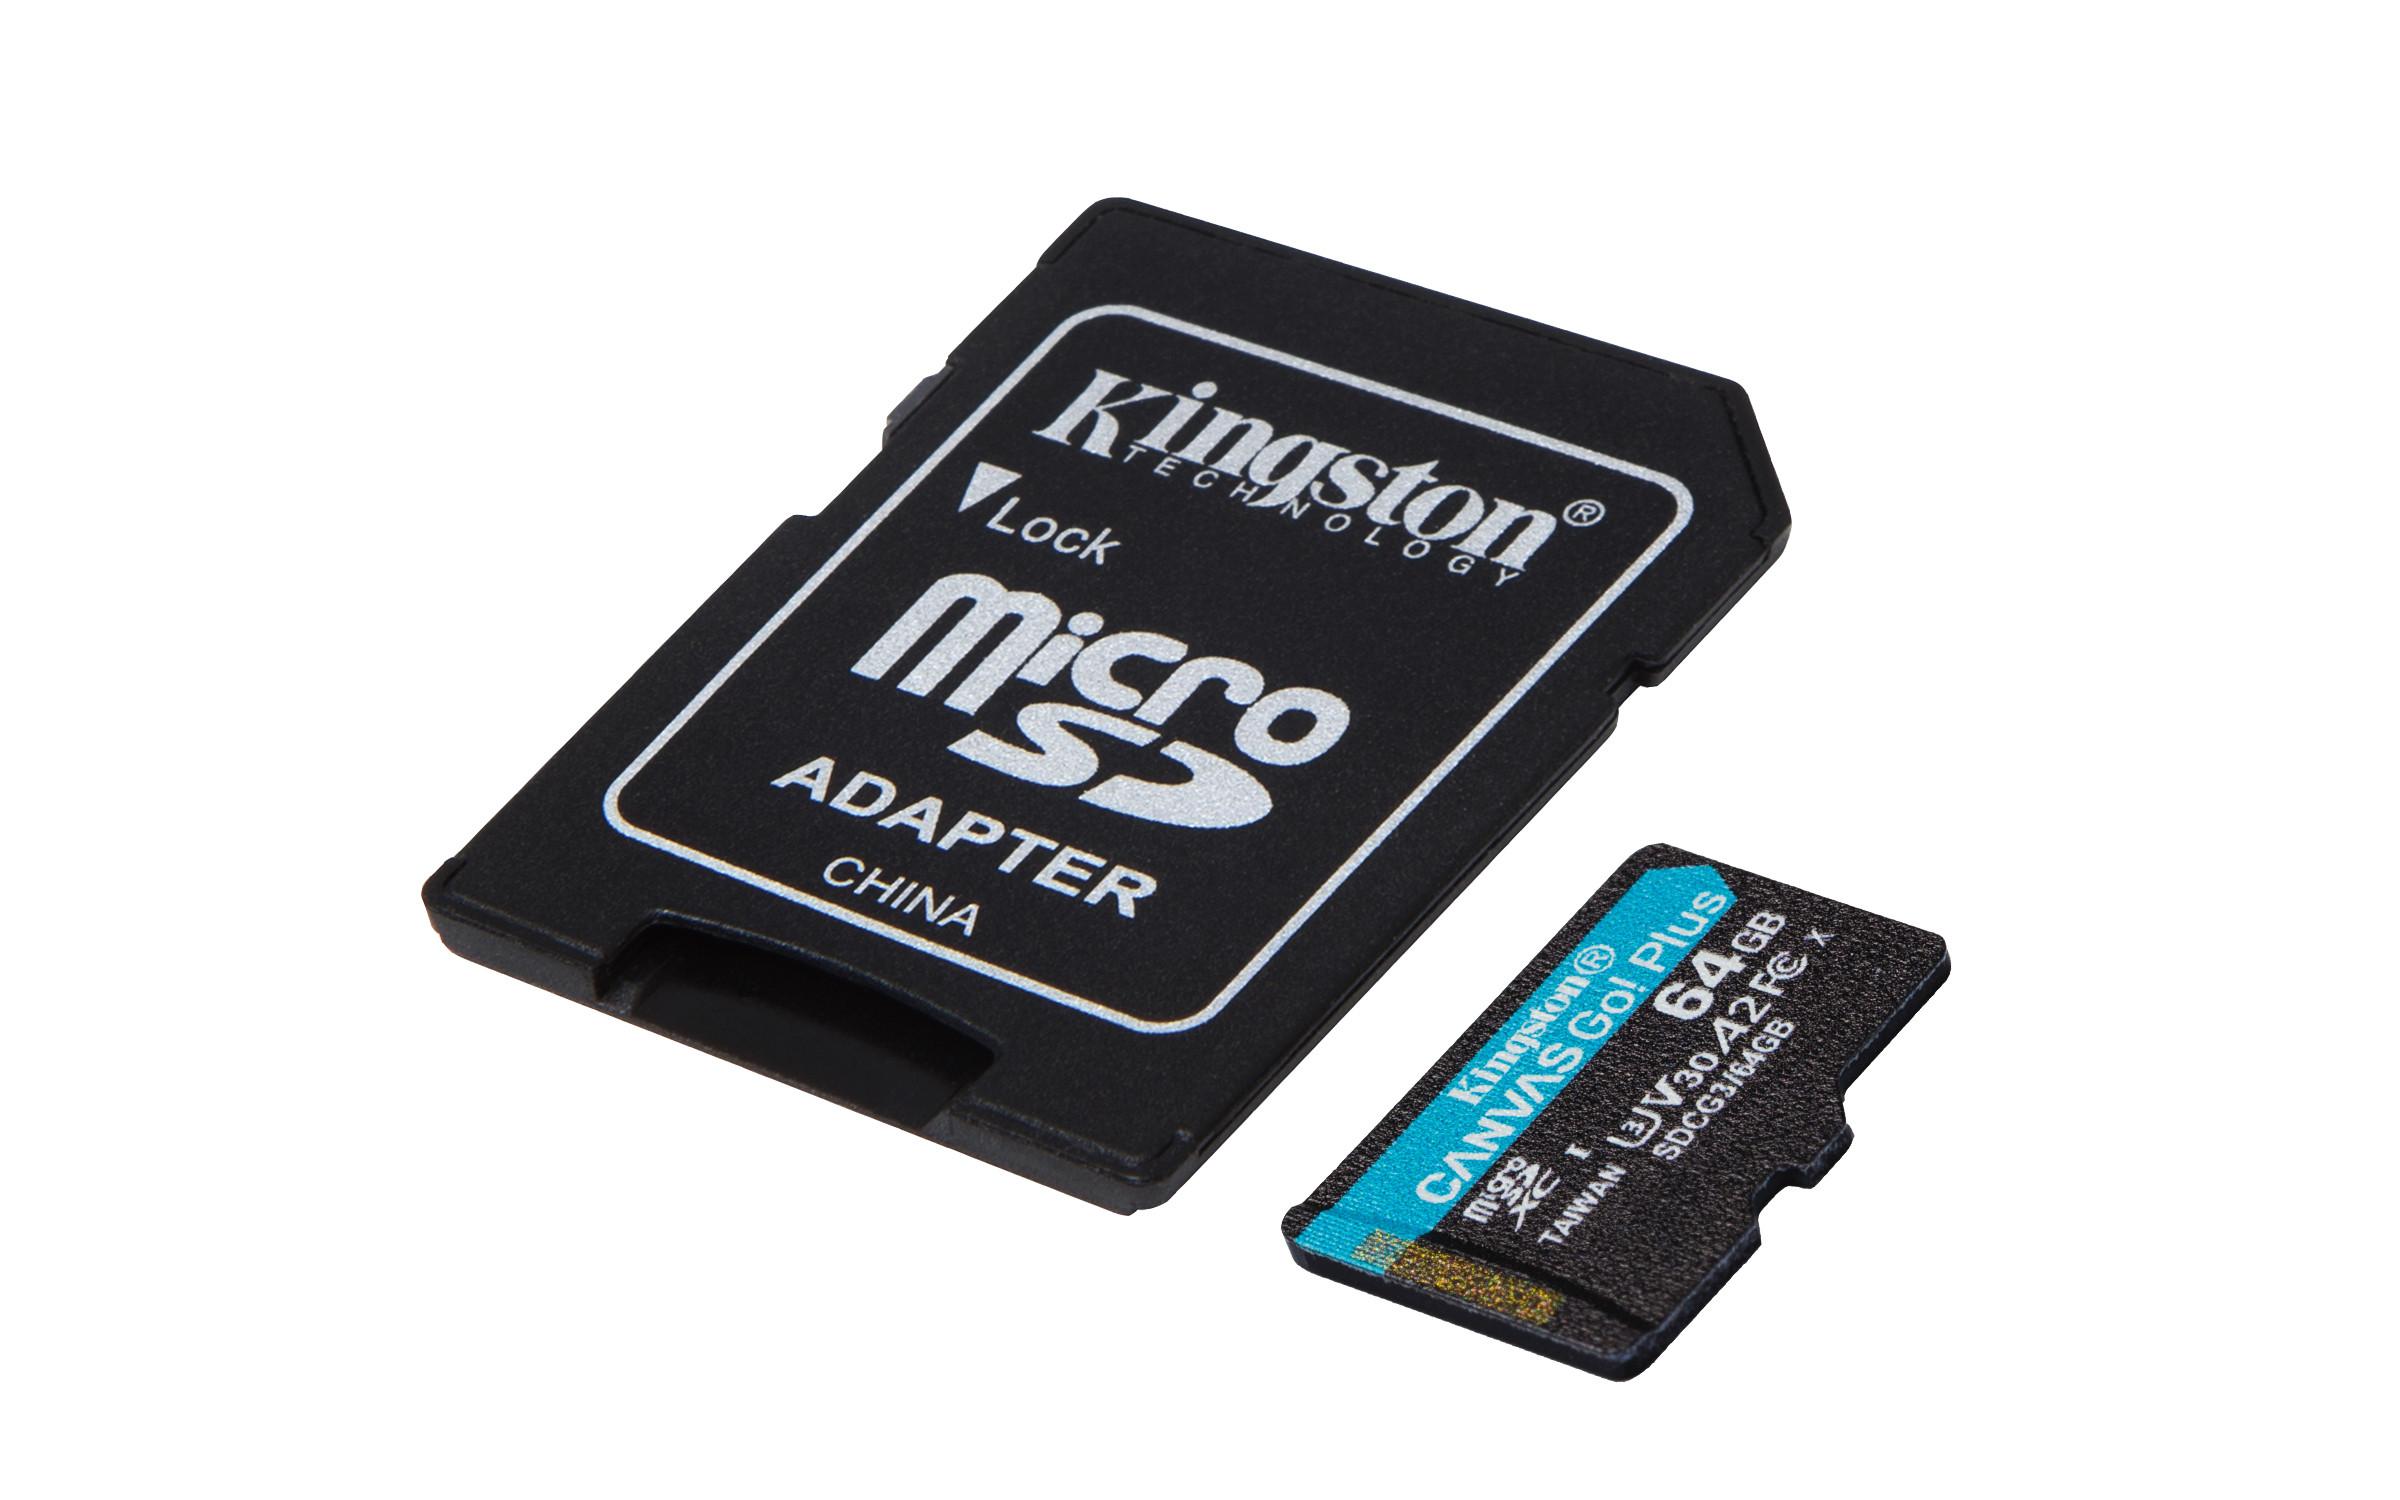 Kingston  Canvas Go Plus (microSDXC, 64 GB, U3, UHS-I) 